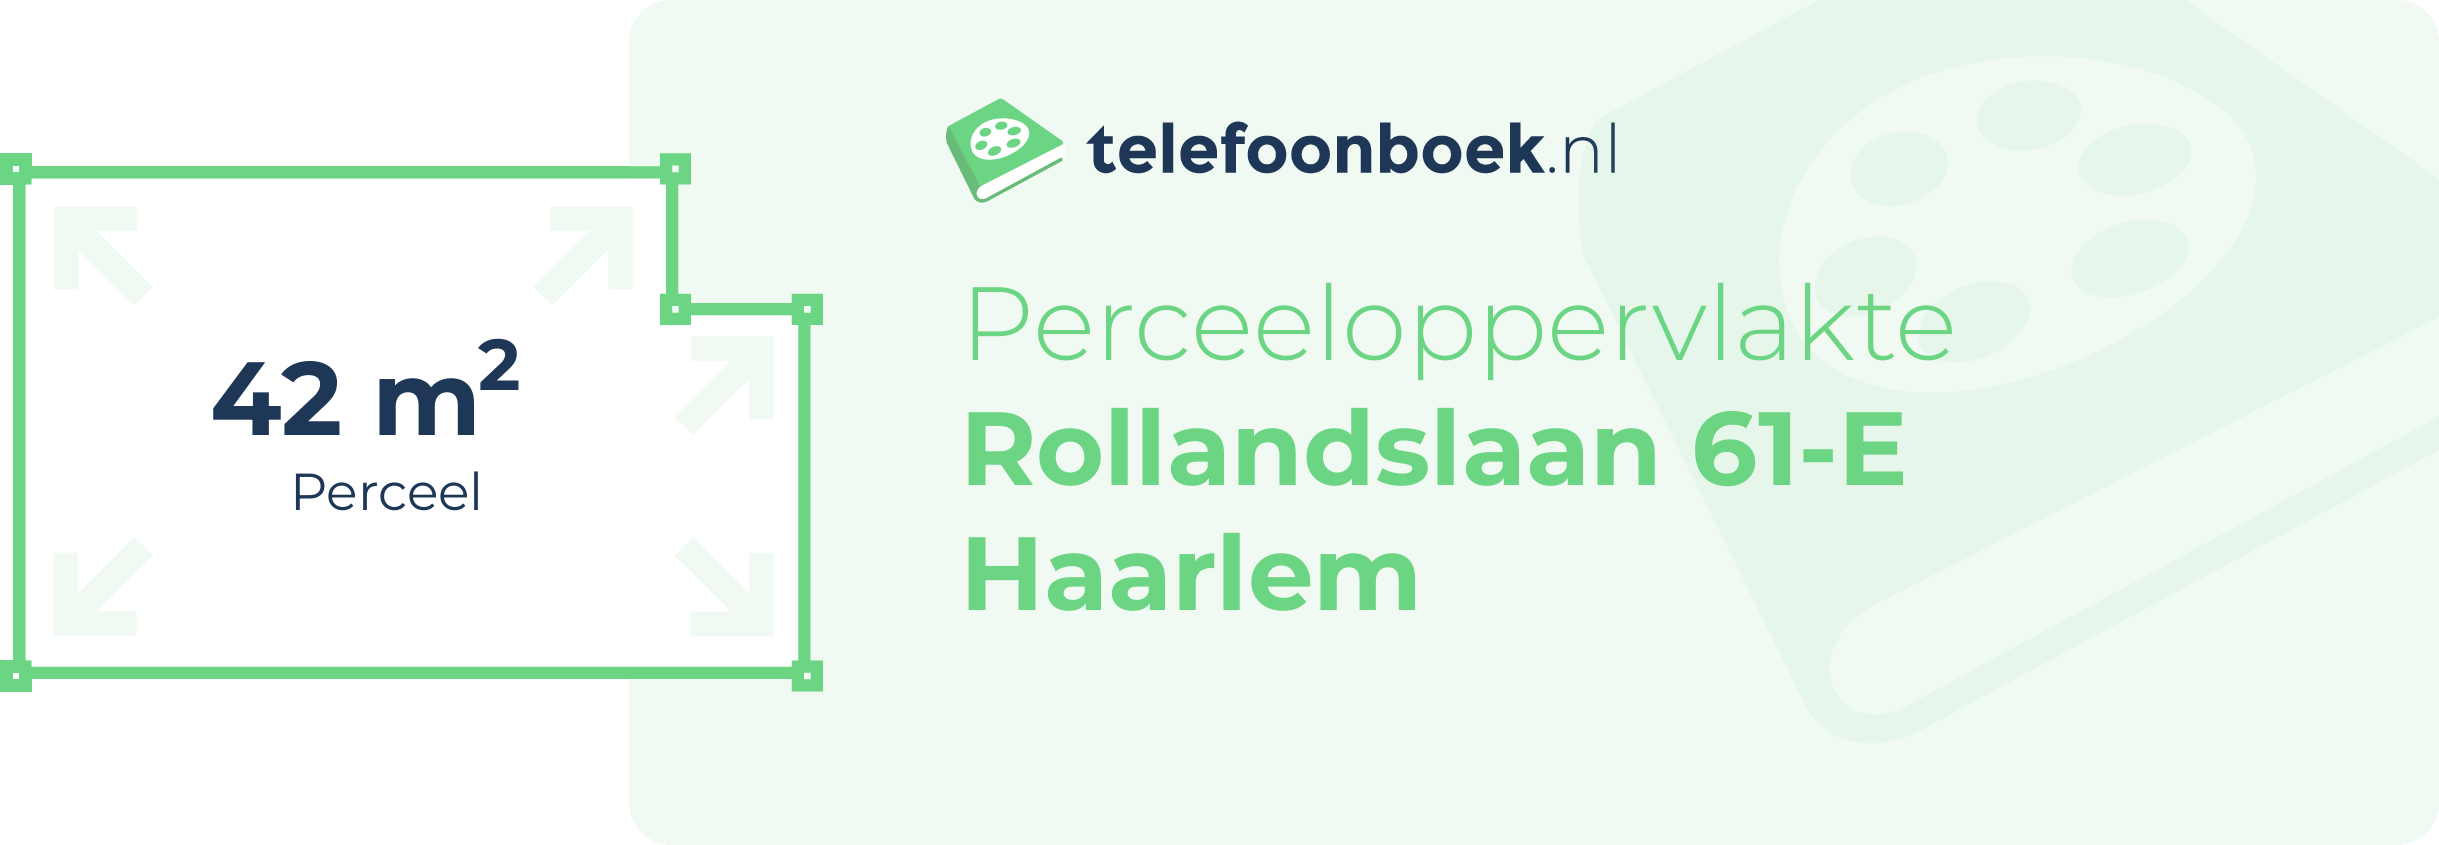 Perceeloppervlakte Rollandslaan 61-E Haarlem